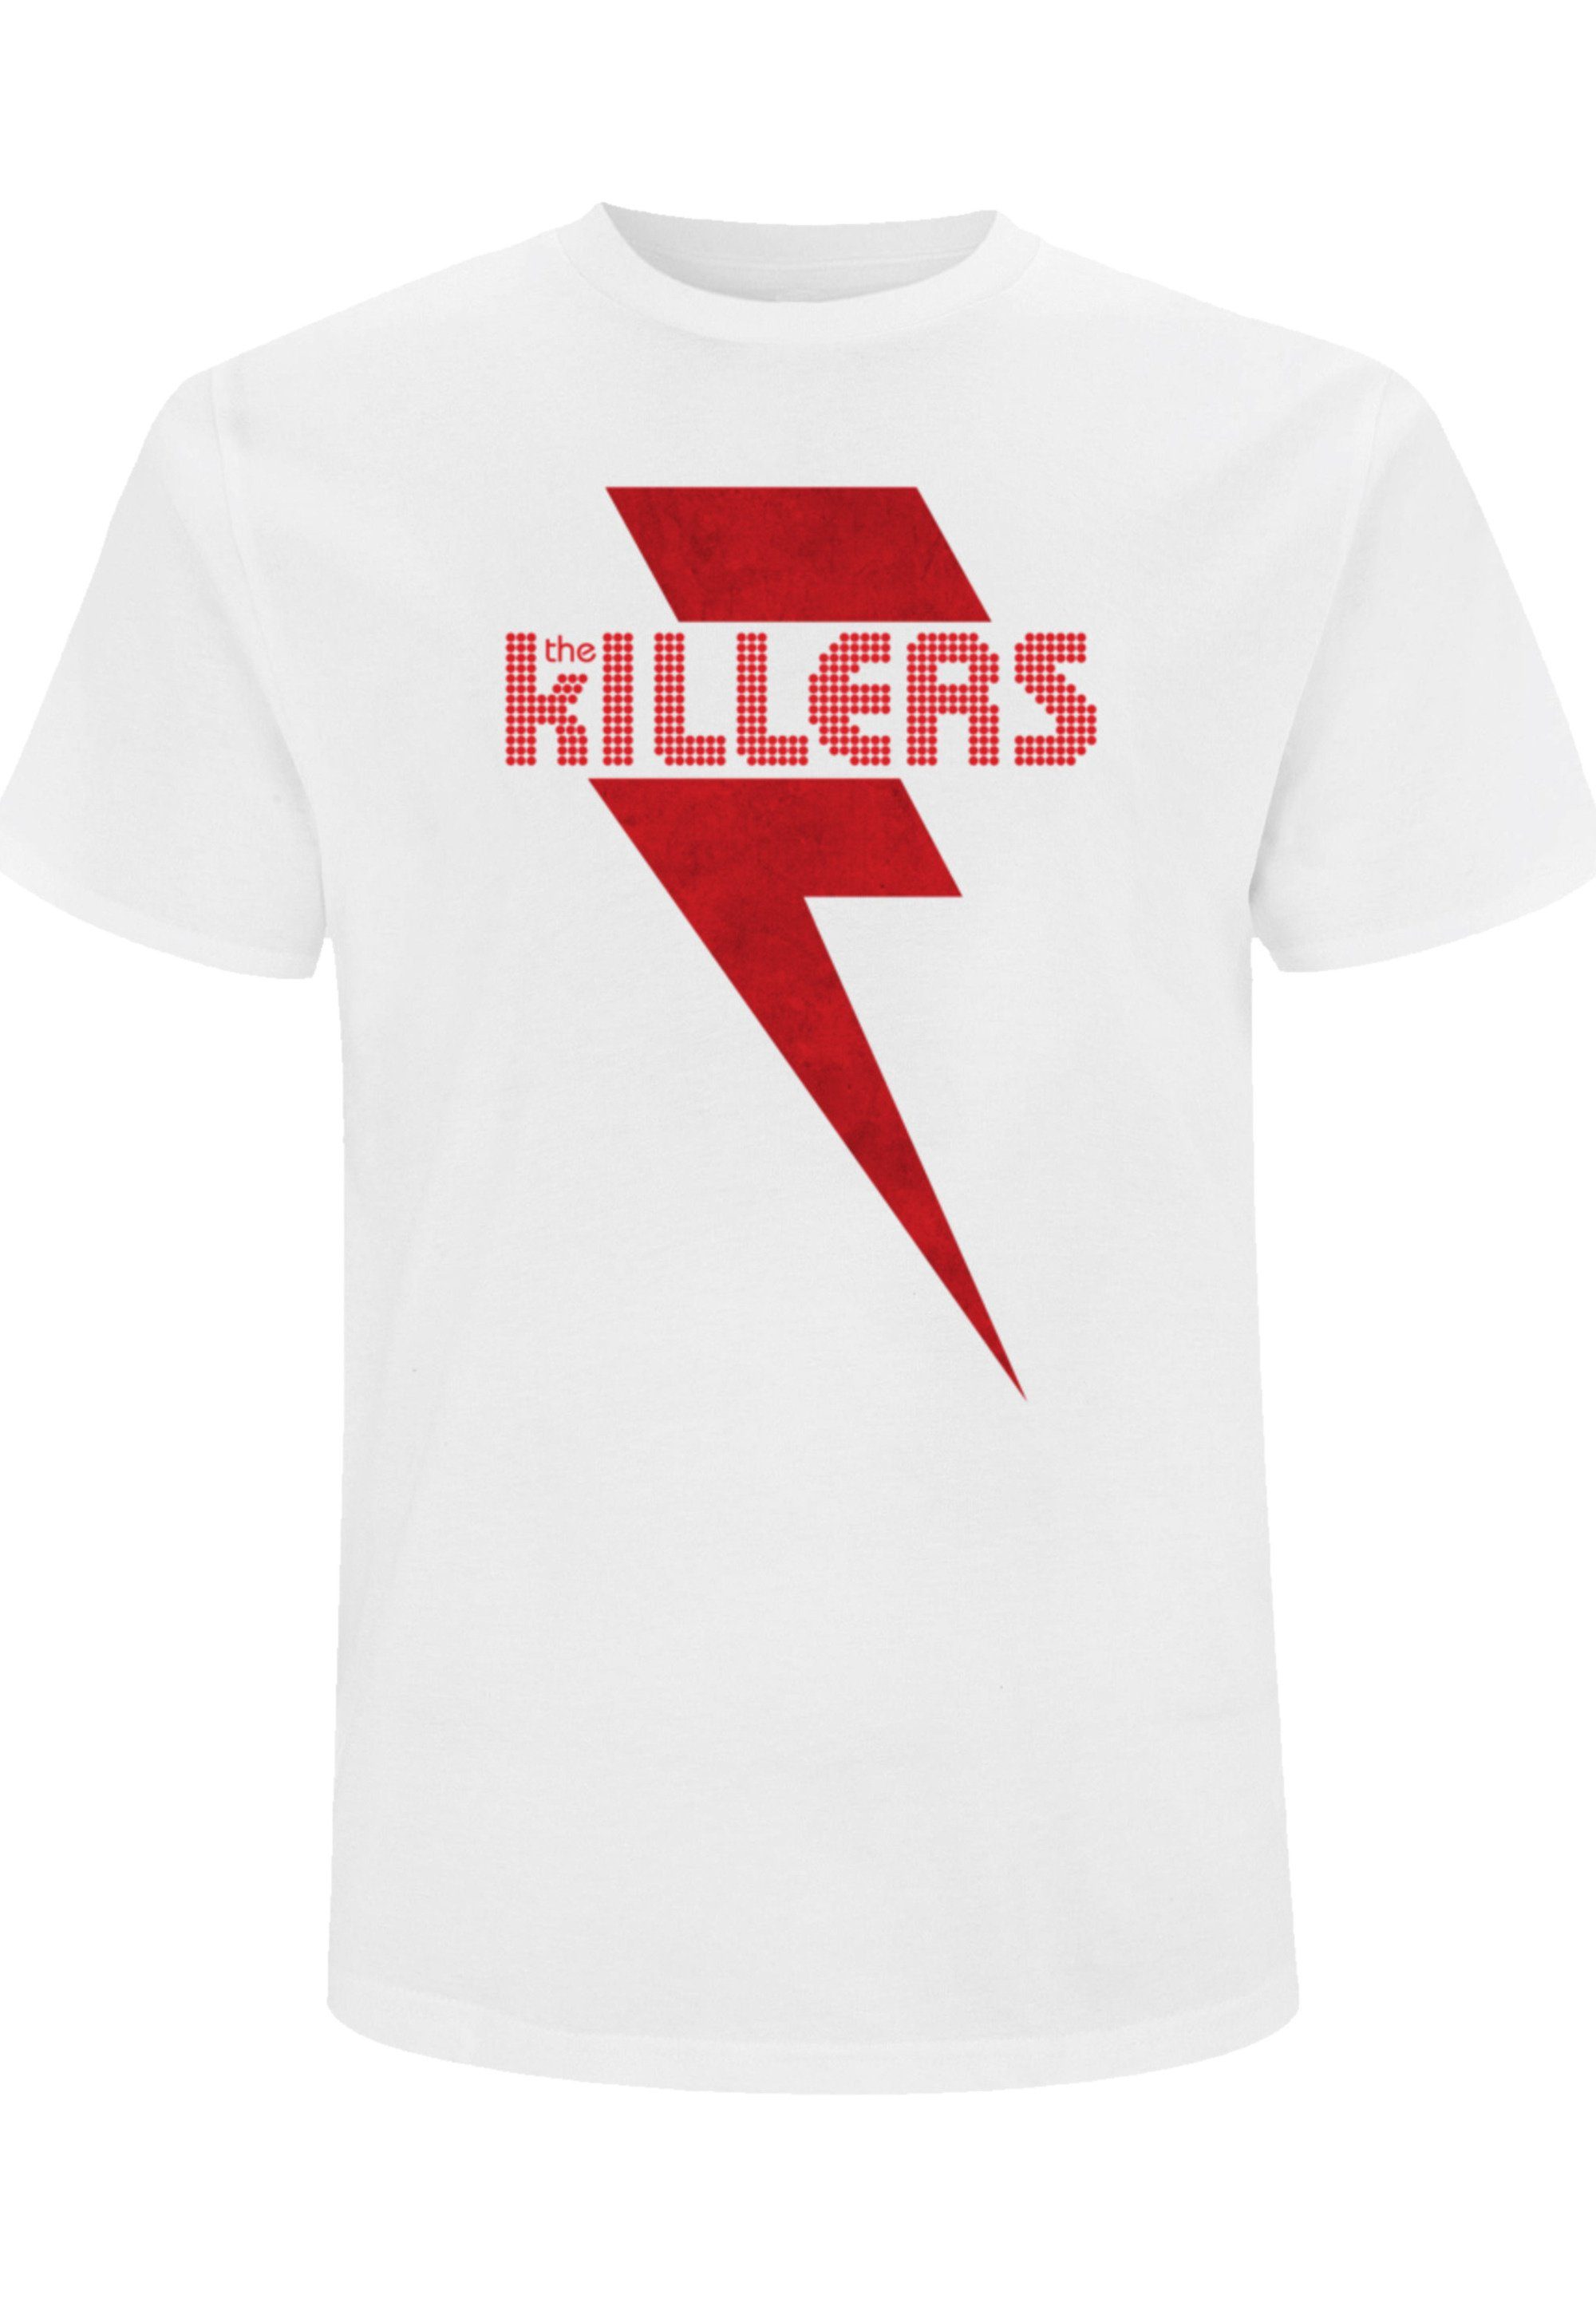 Bolt Killers hergestellt Arbeitsbedingungen F4NT4STIC Red Unter fairen T-Shirt The Print,